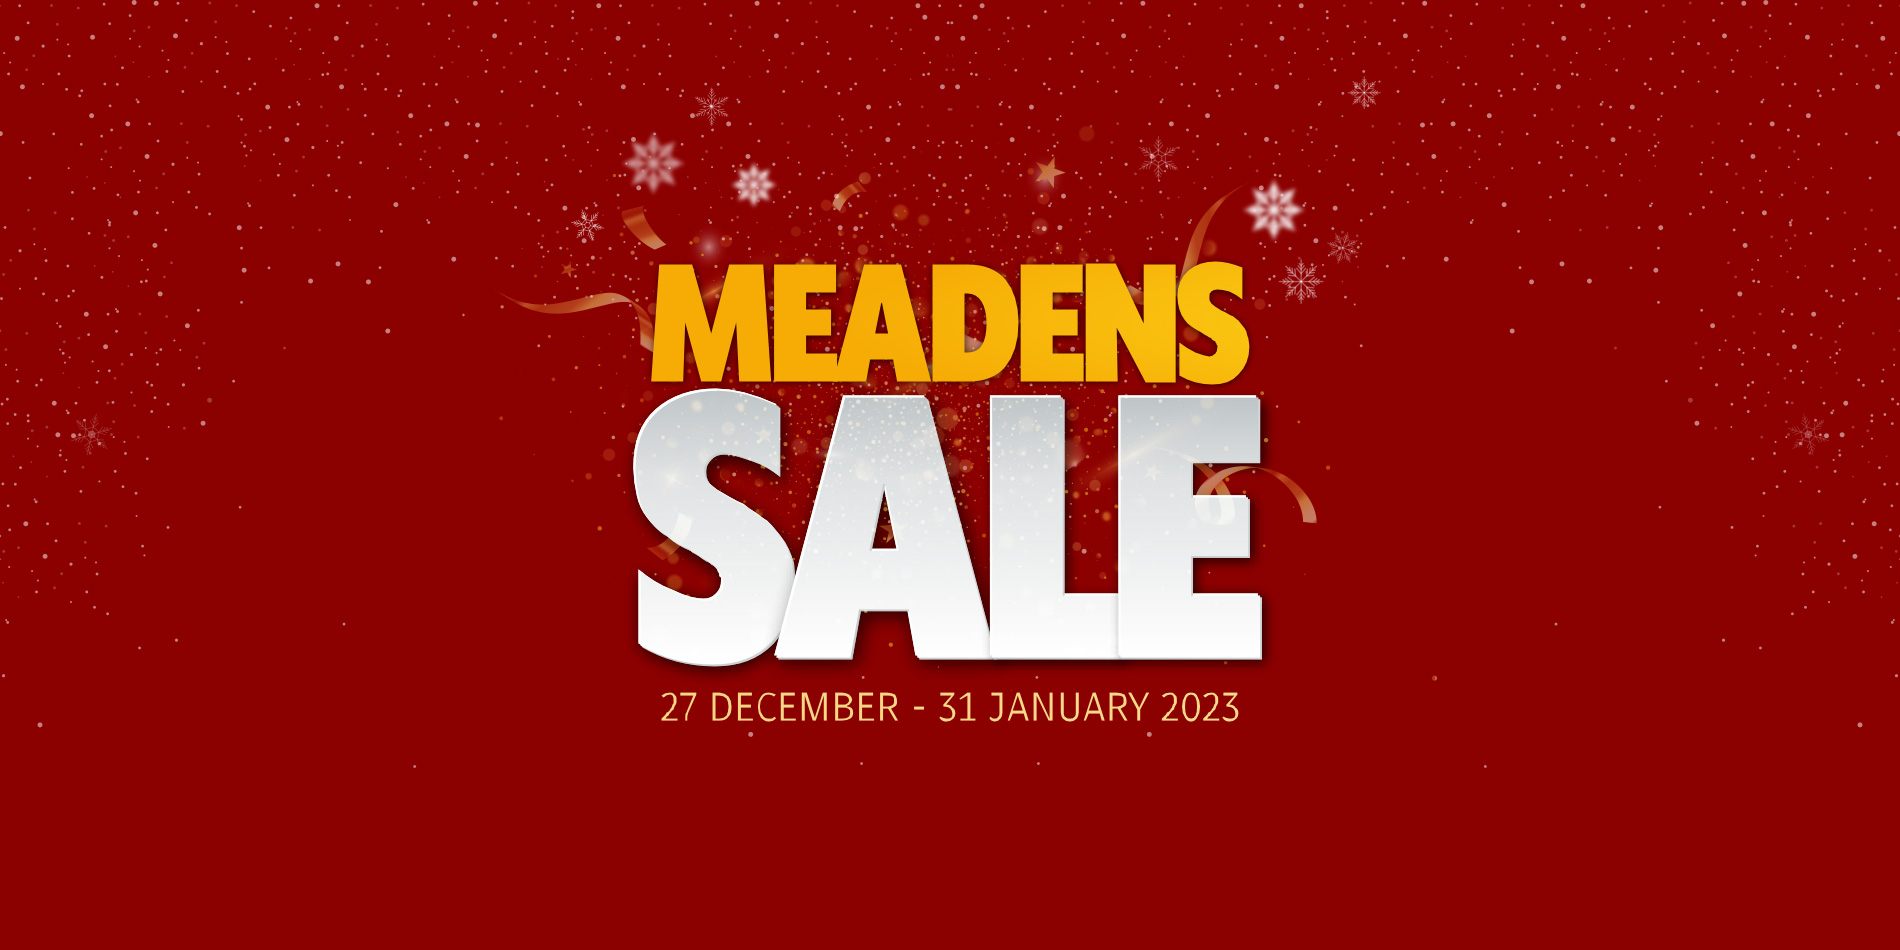 The Meadens Sale